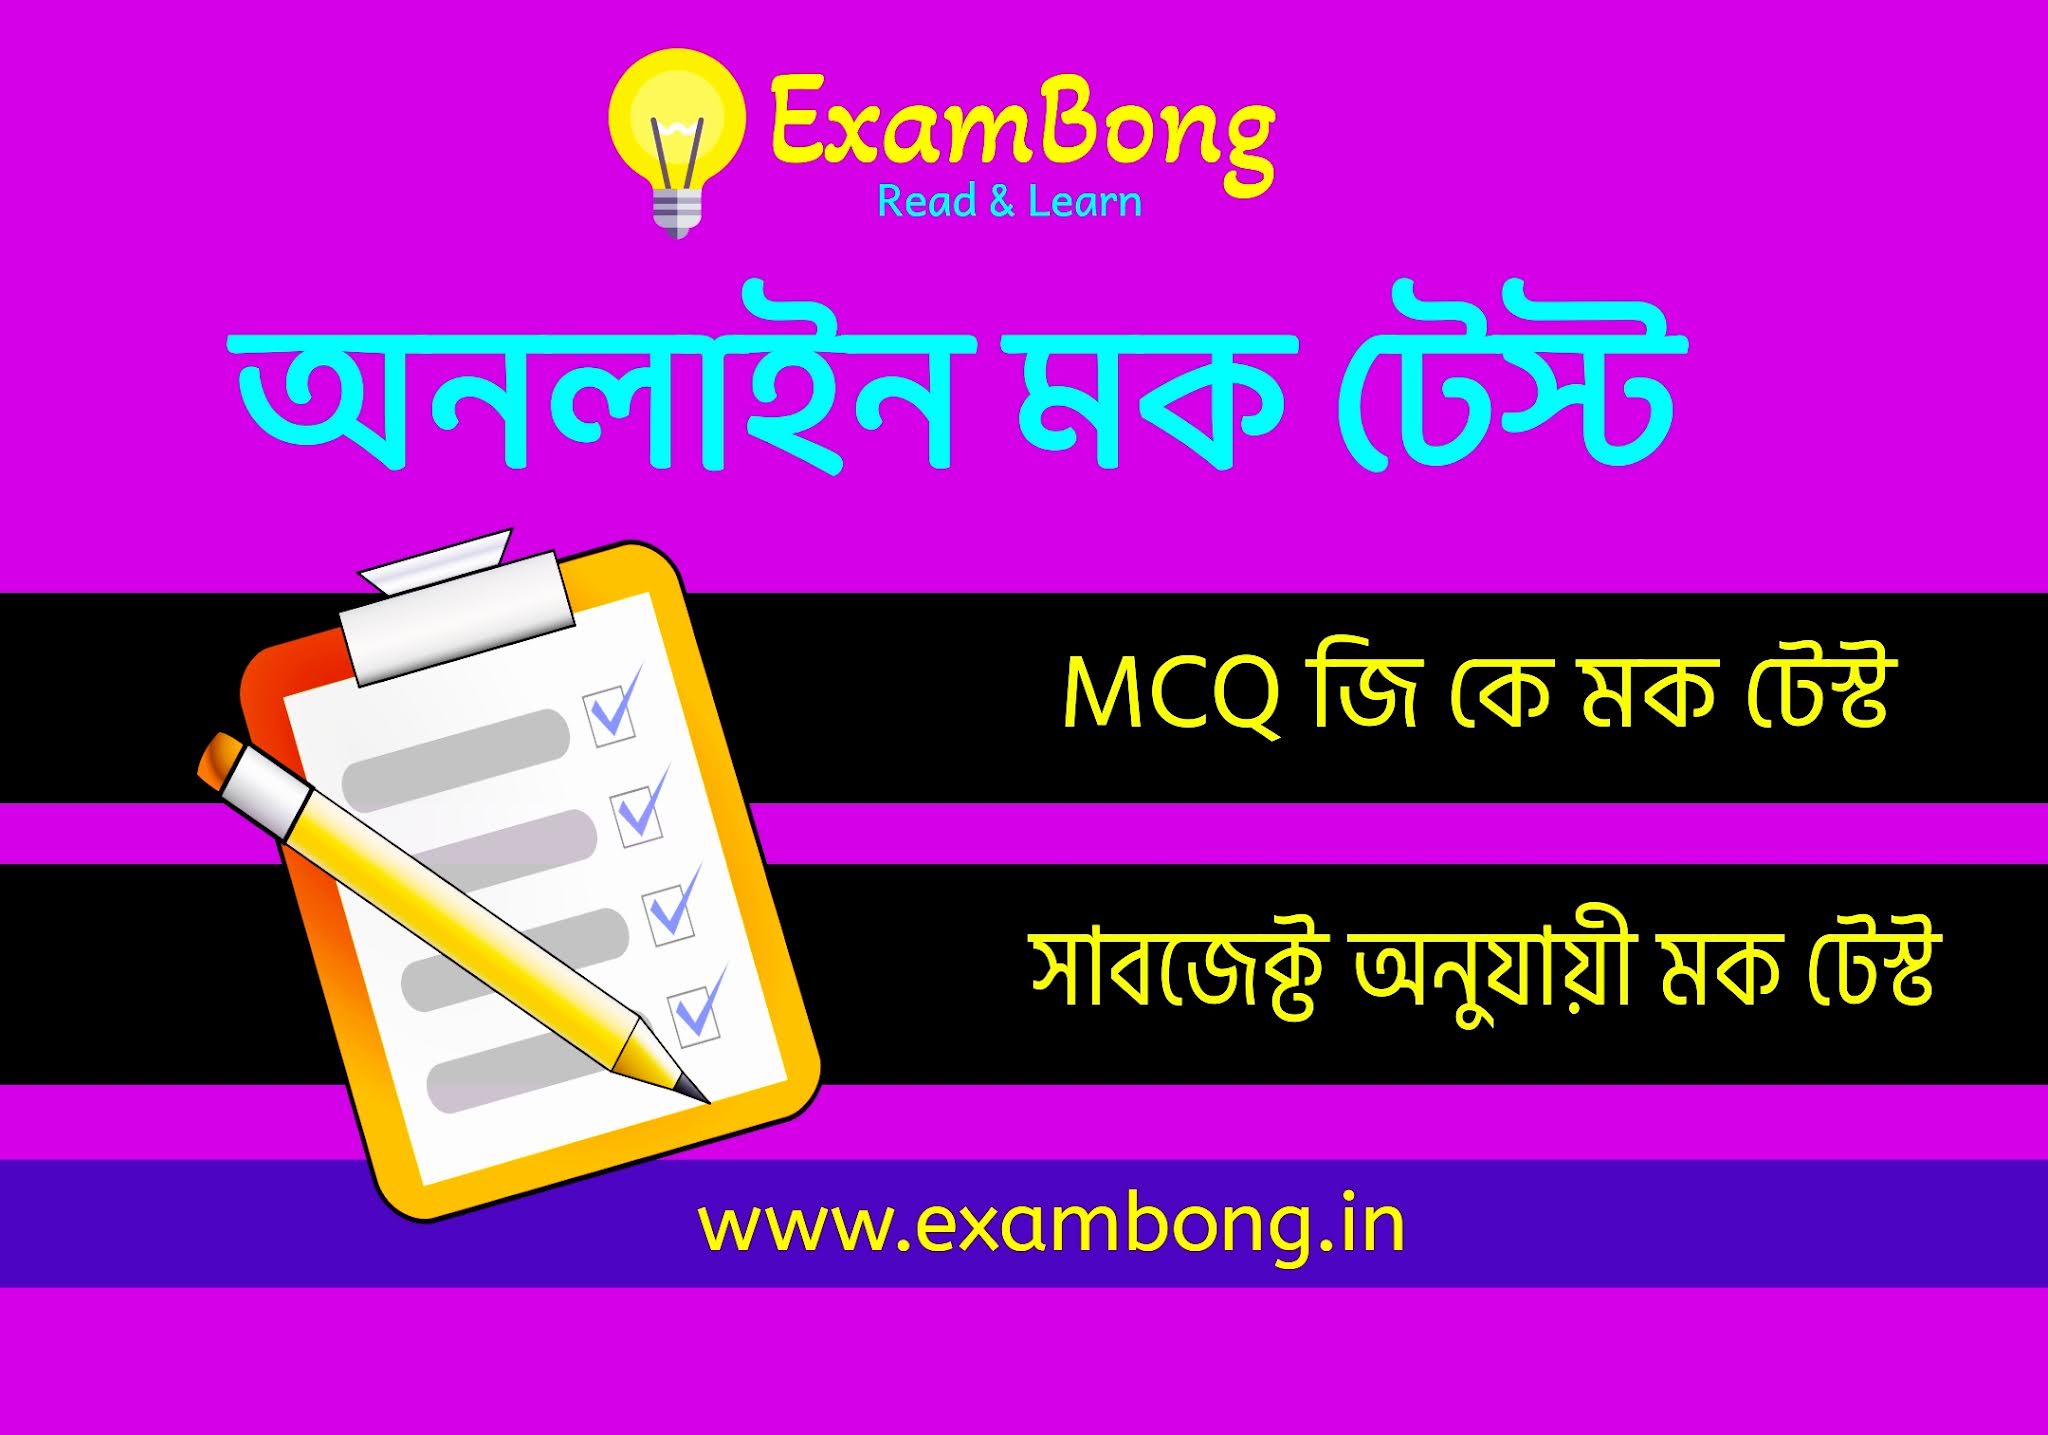 Online Mock Tests in Bengali